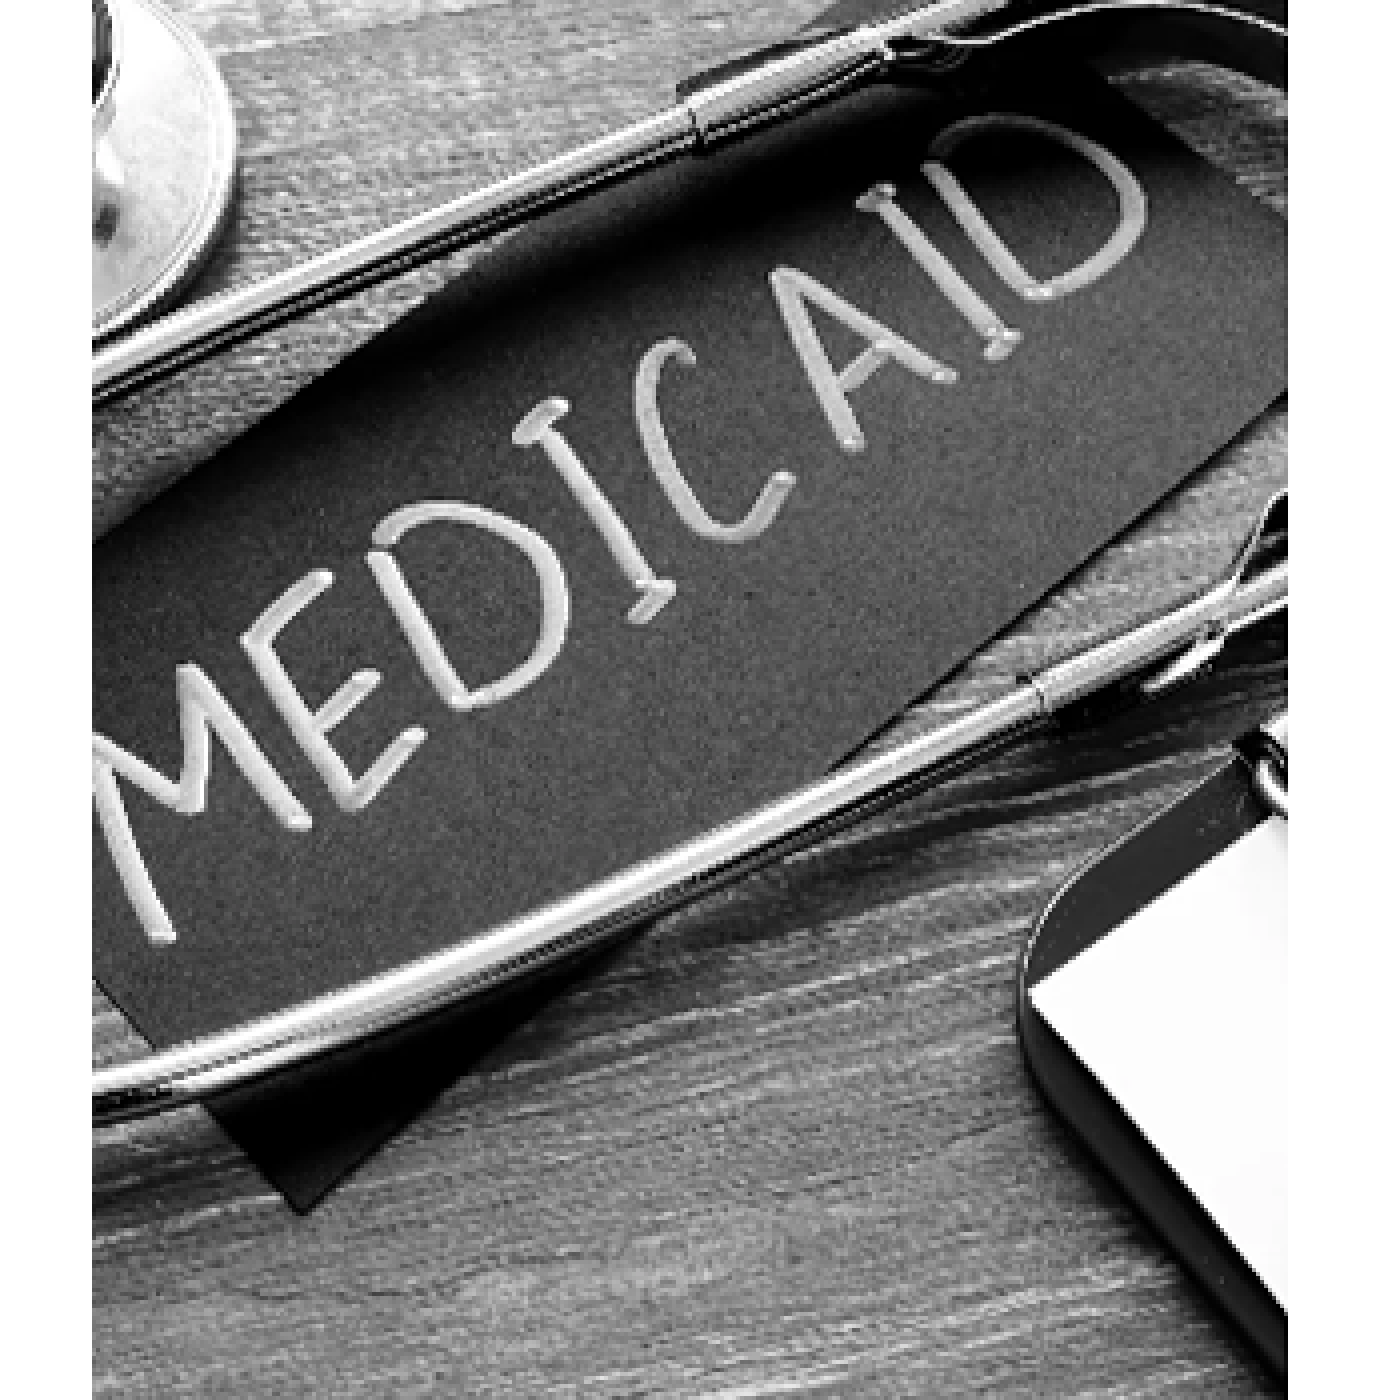 Myths about Medicaid